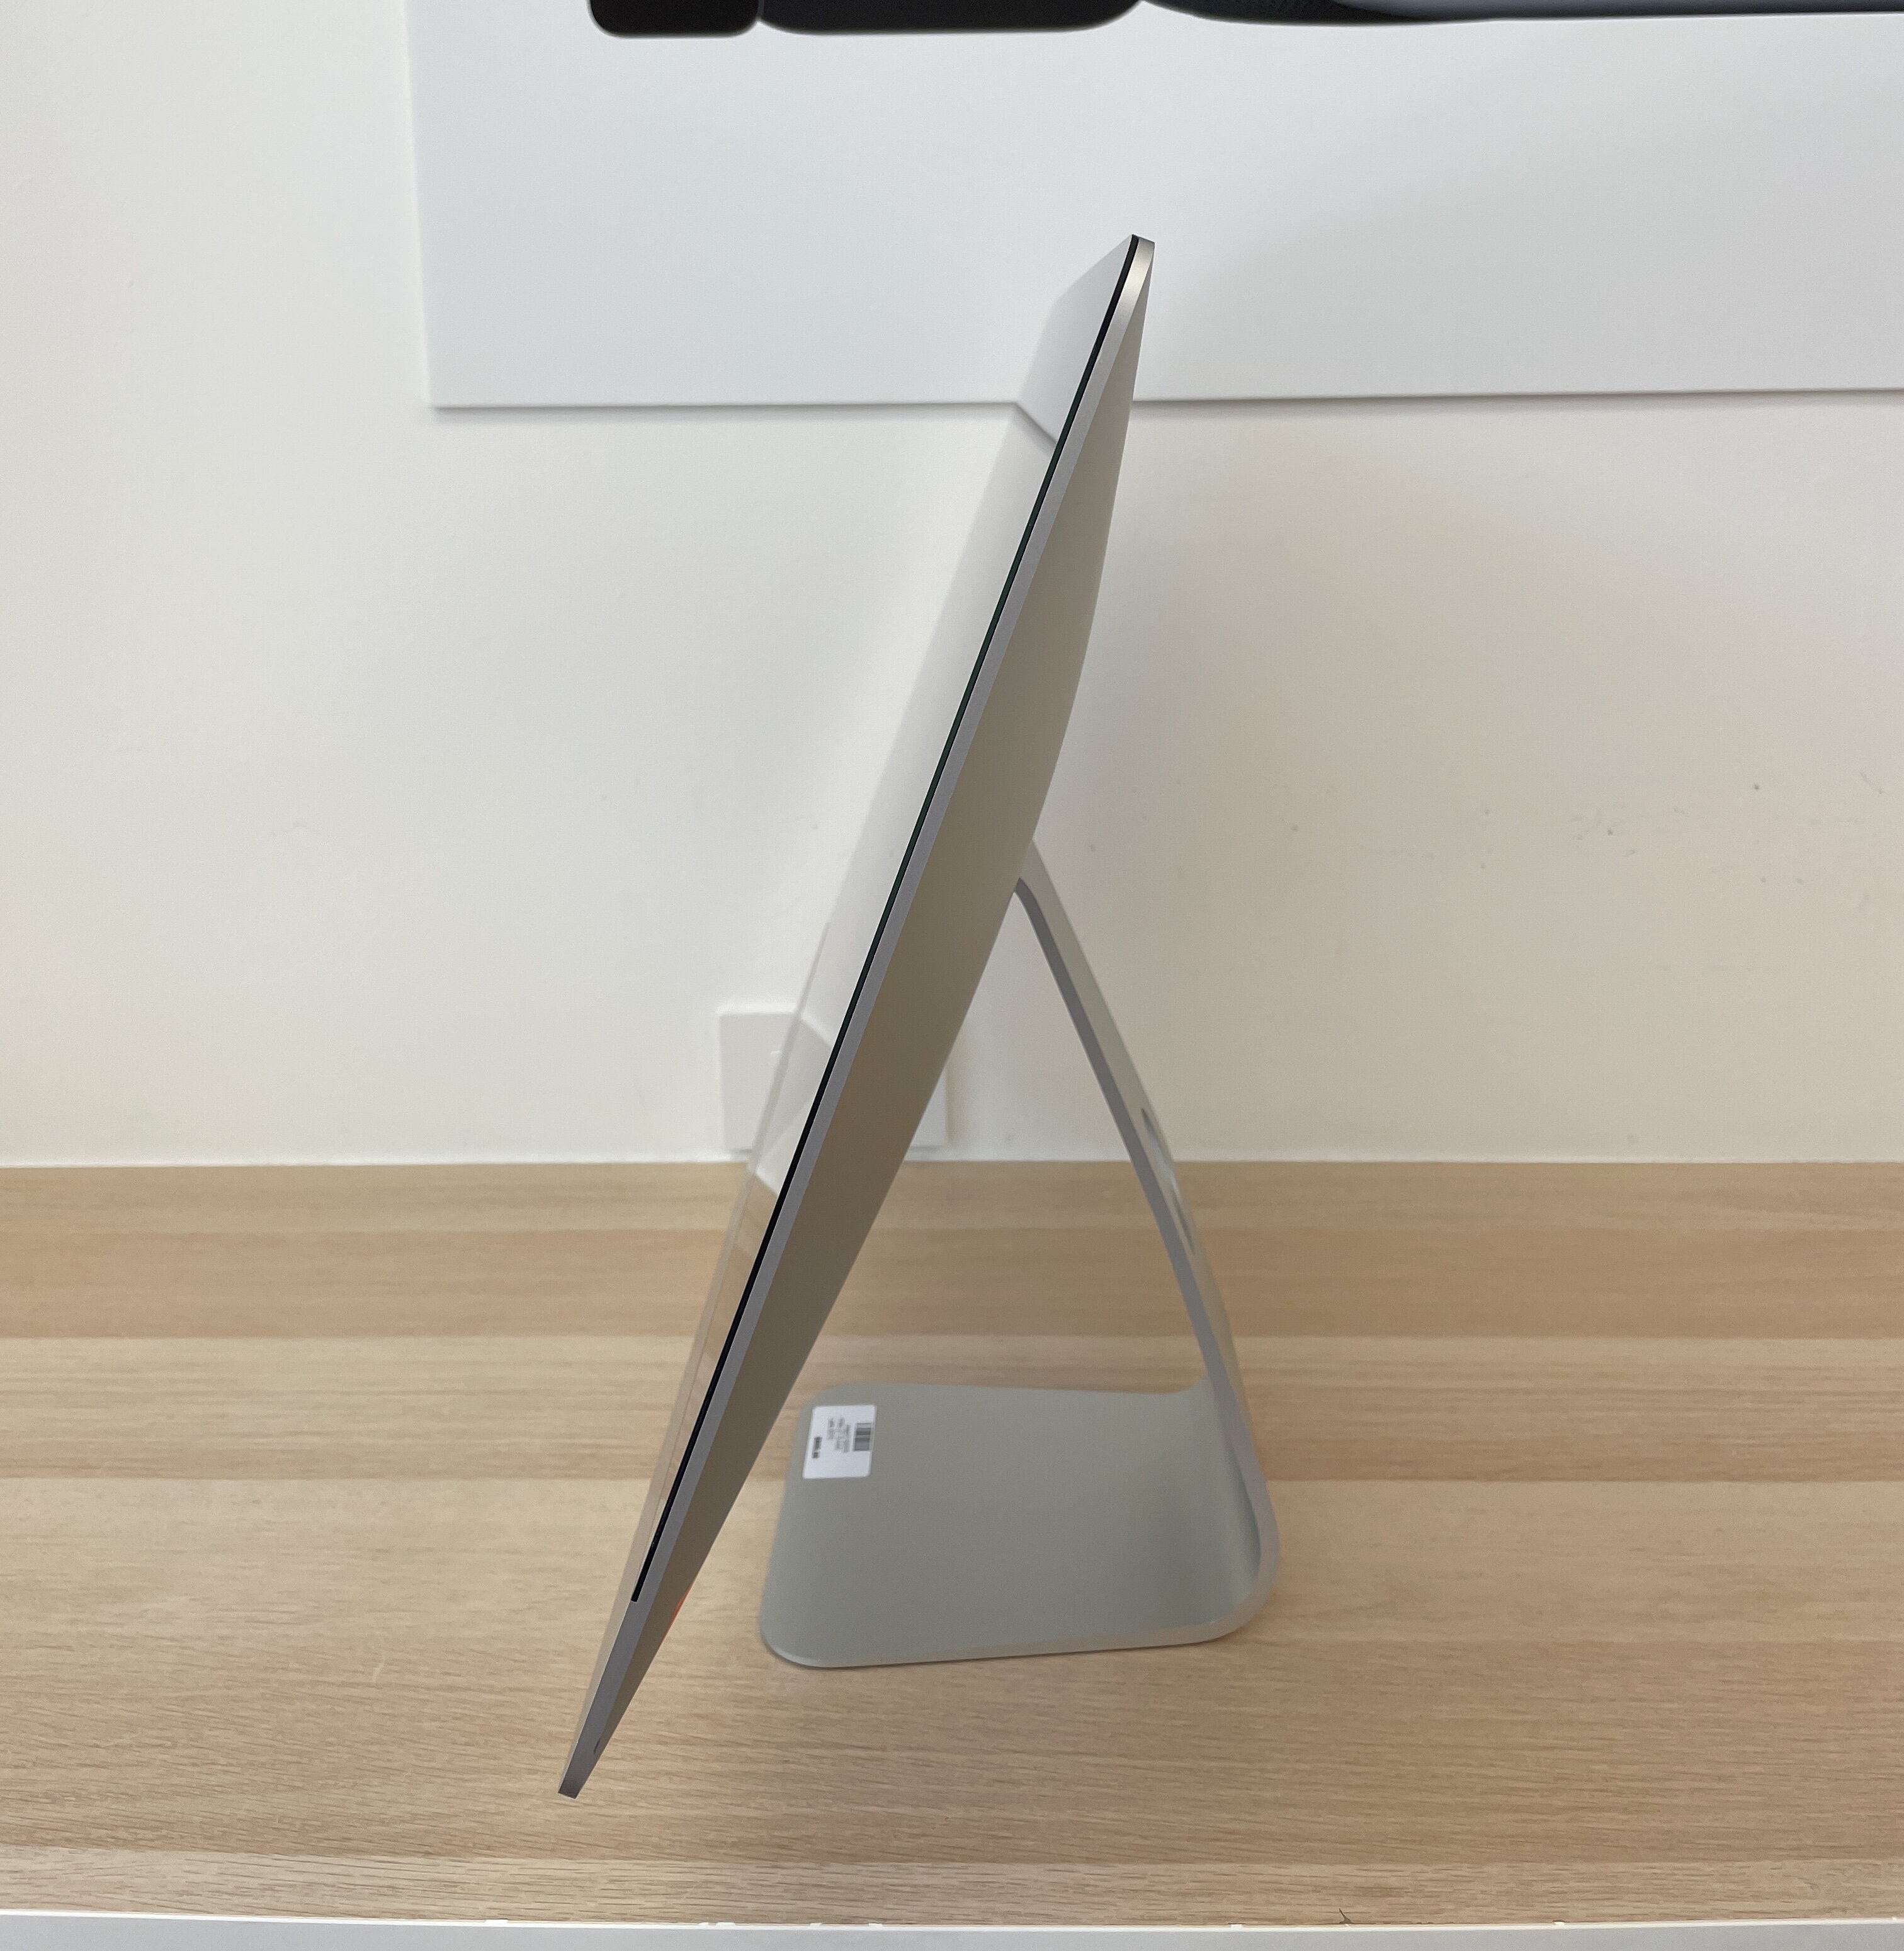 iMac (21.5-inch, Late 2015) - Informatique Bluetech Inc